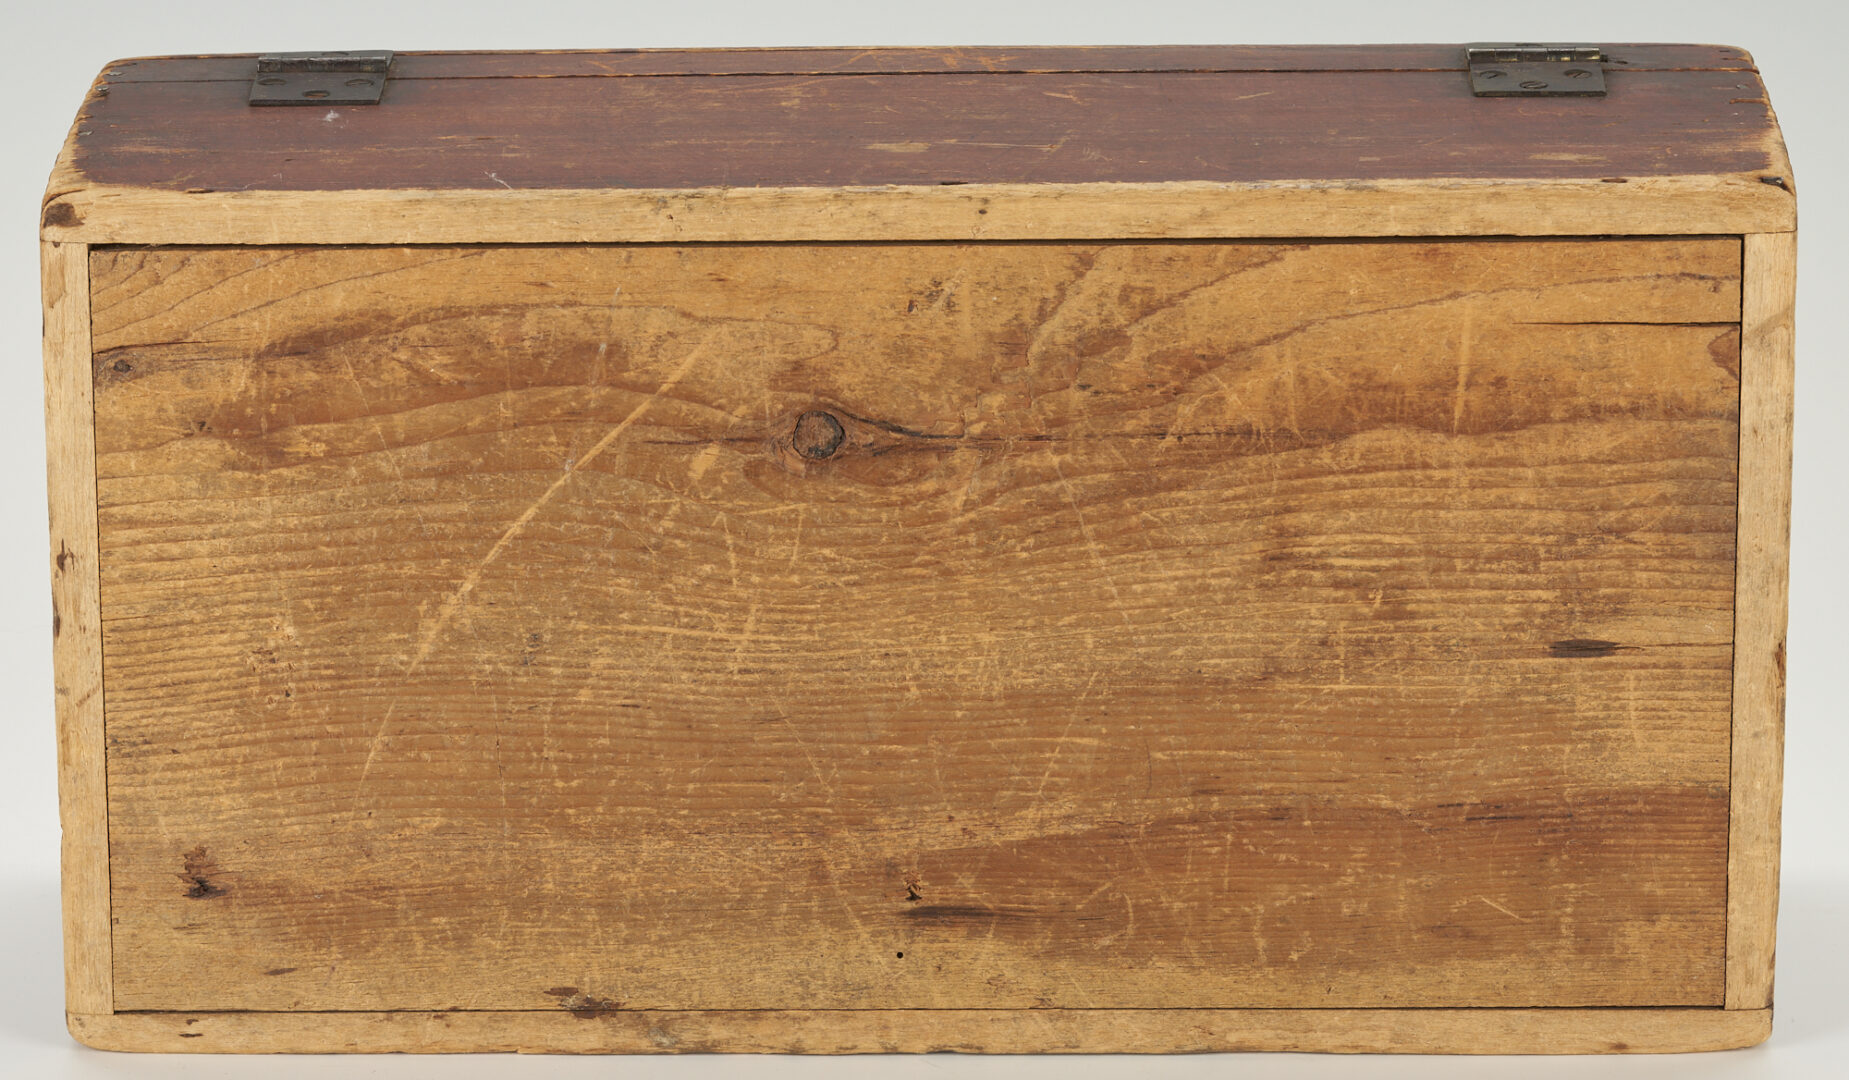 Lot 833: 19th c. New York Keepsafe Box, Miniature Buttocks Basket, 2 Political Ribbons